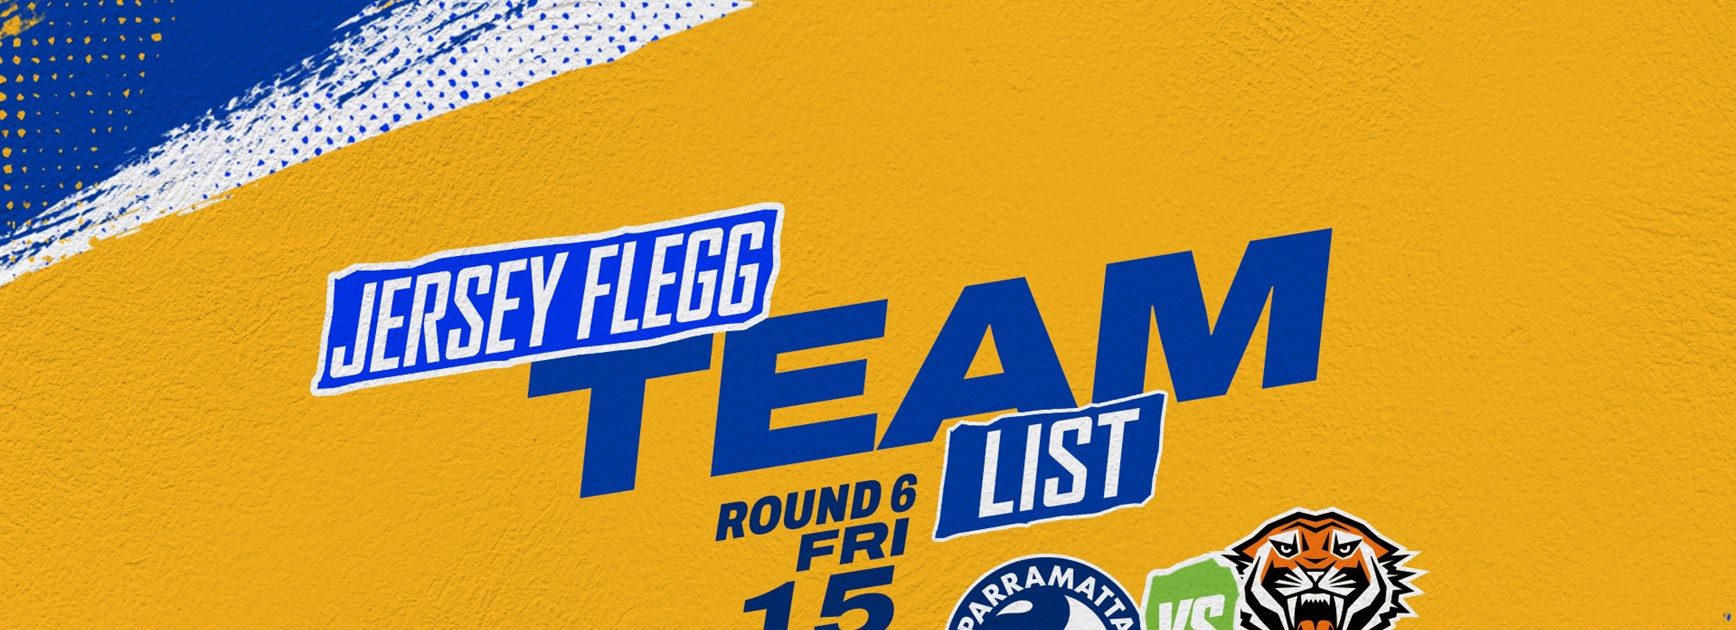 Jersey Flegg Cup Team List - Eels v Wests Tigers, Round Six